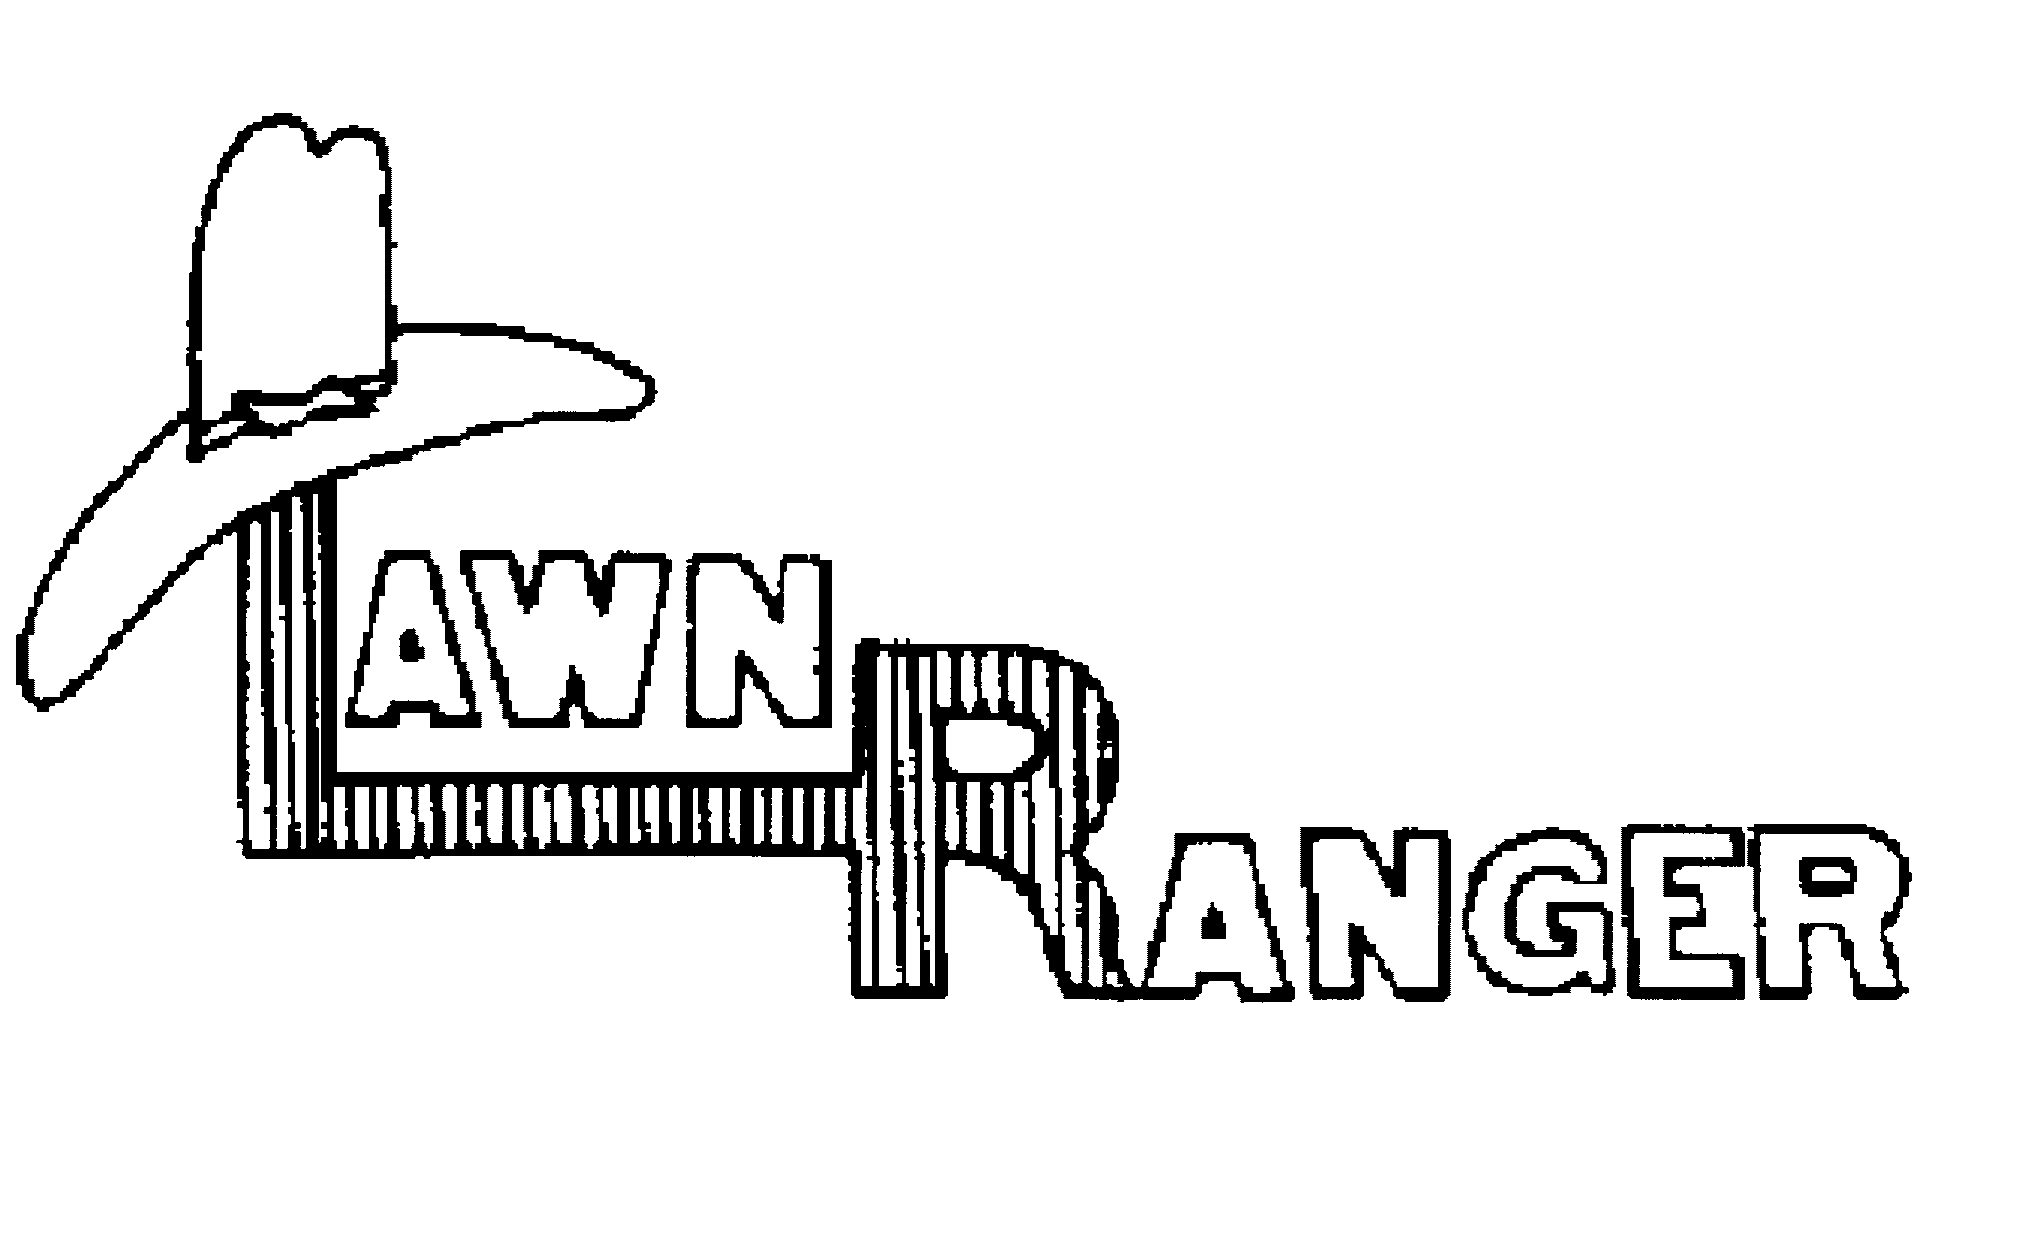 Trademark Logo LAWN RANGER